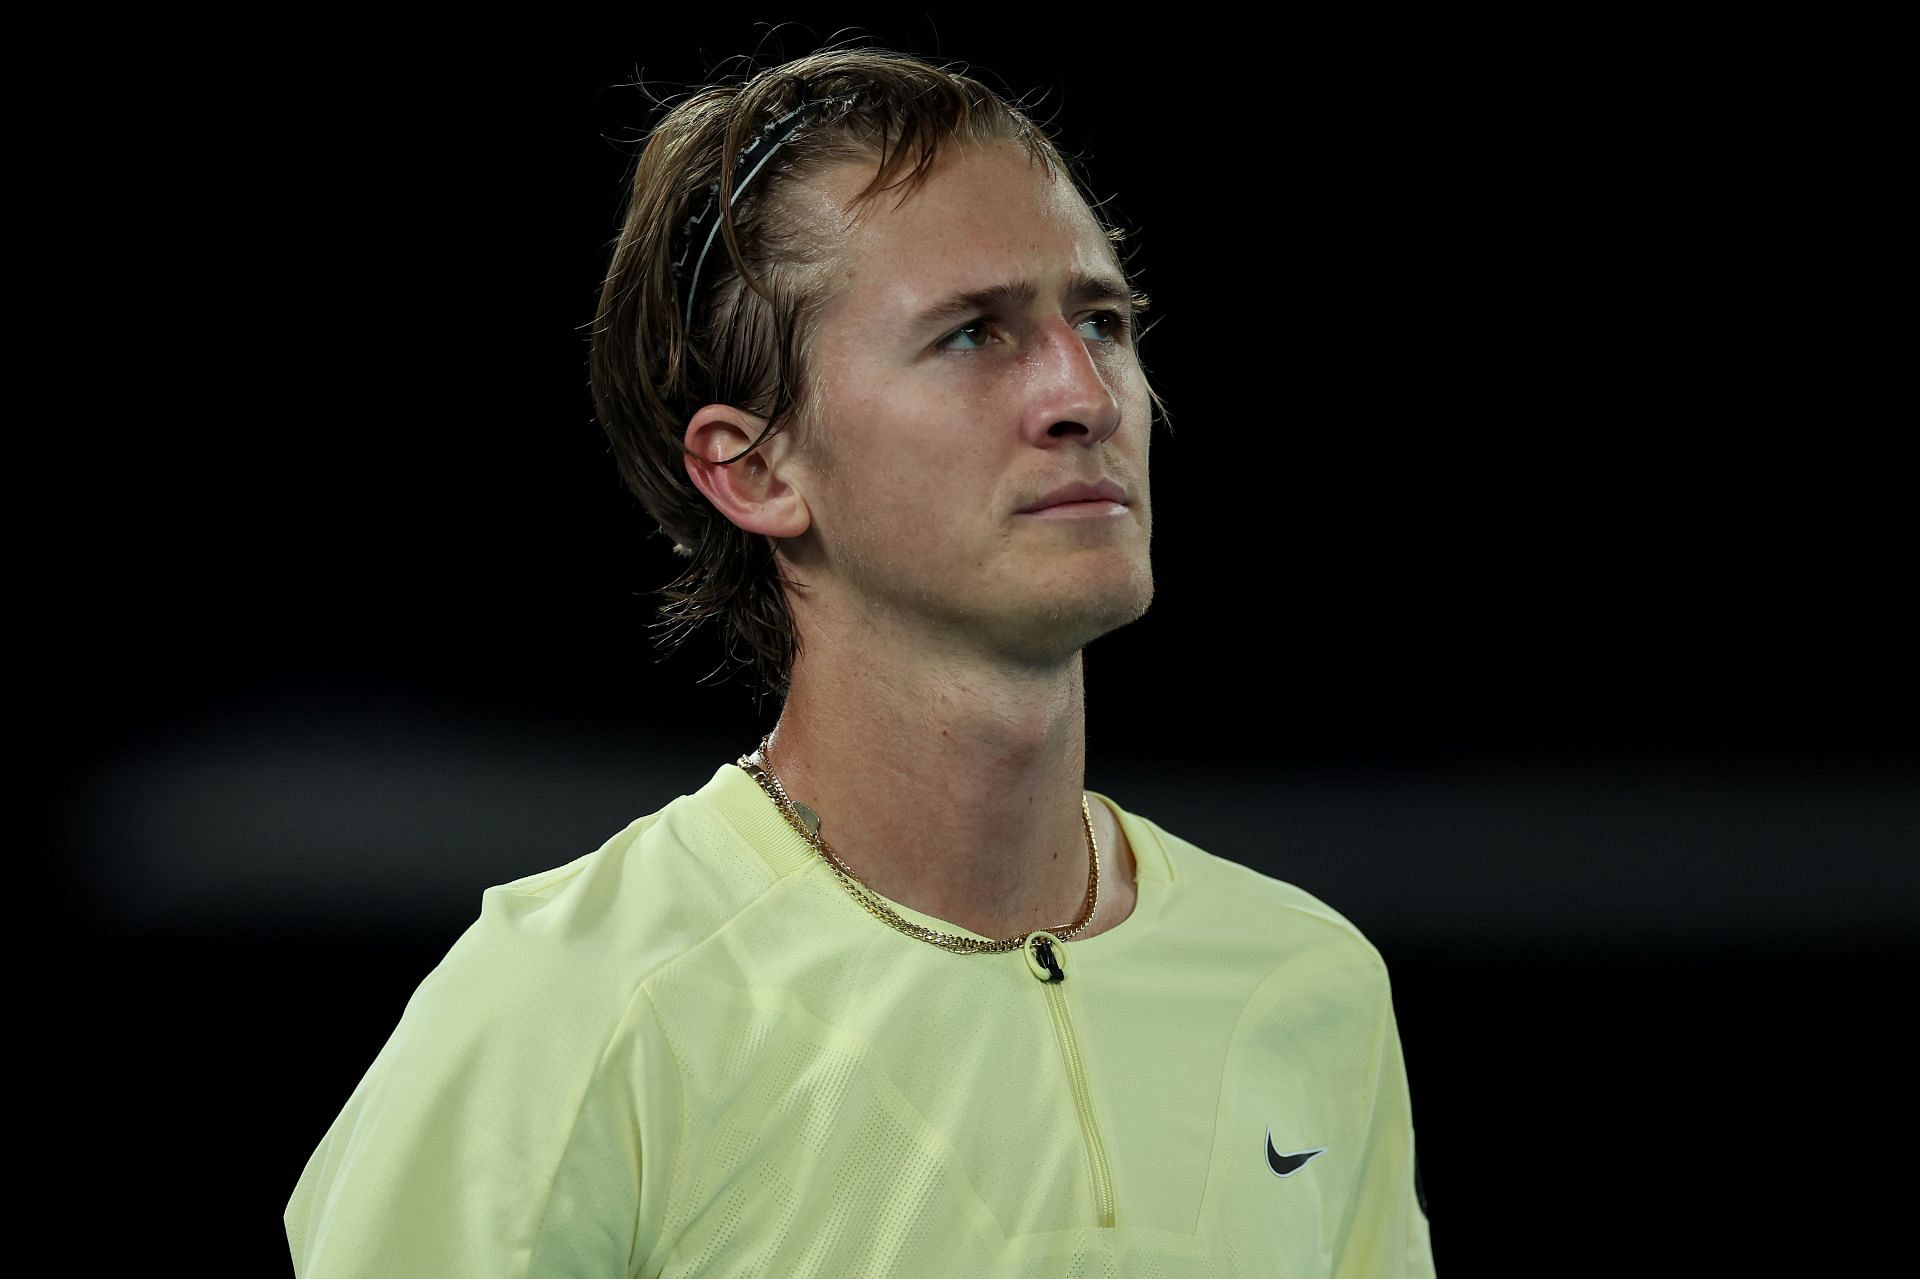 Sebastian Korda pictured at the 2023 Australian Open - Day 9.